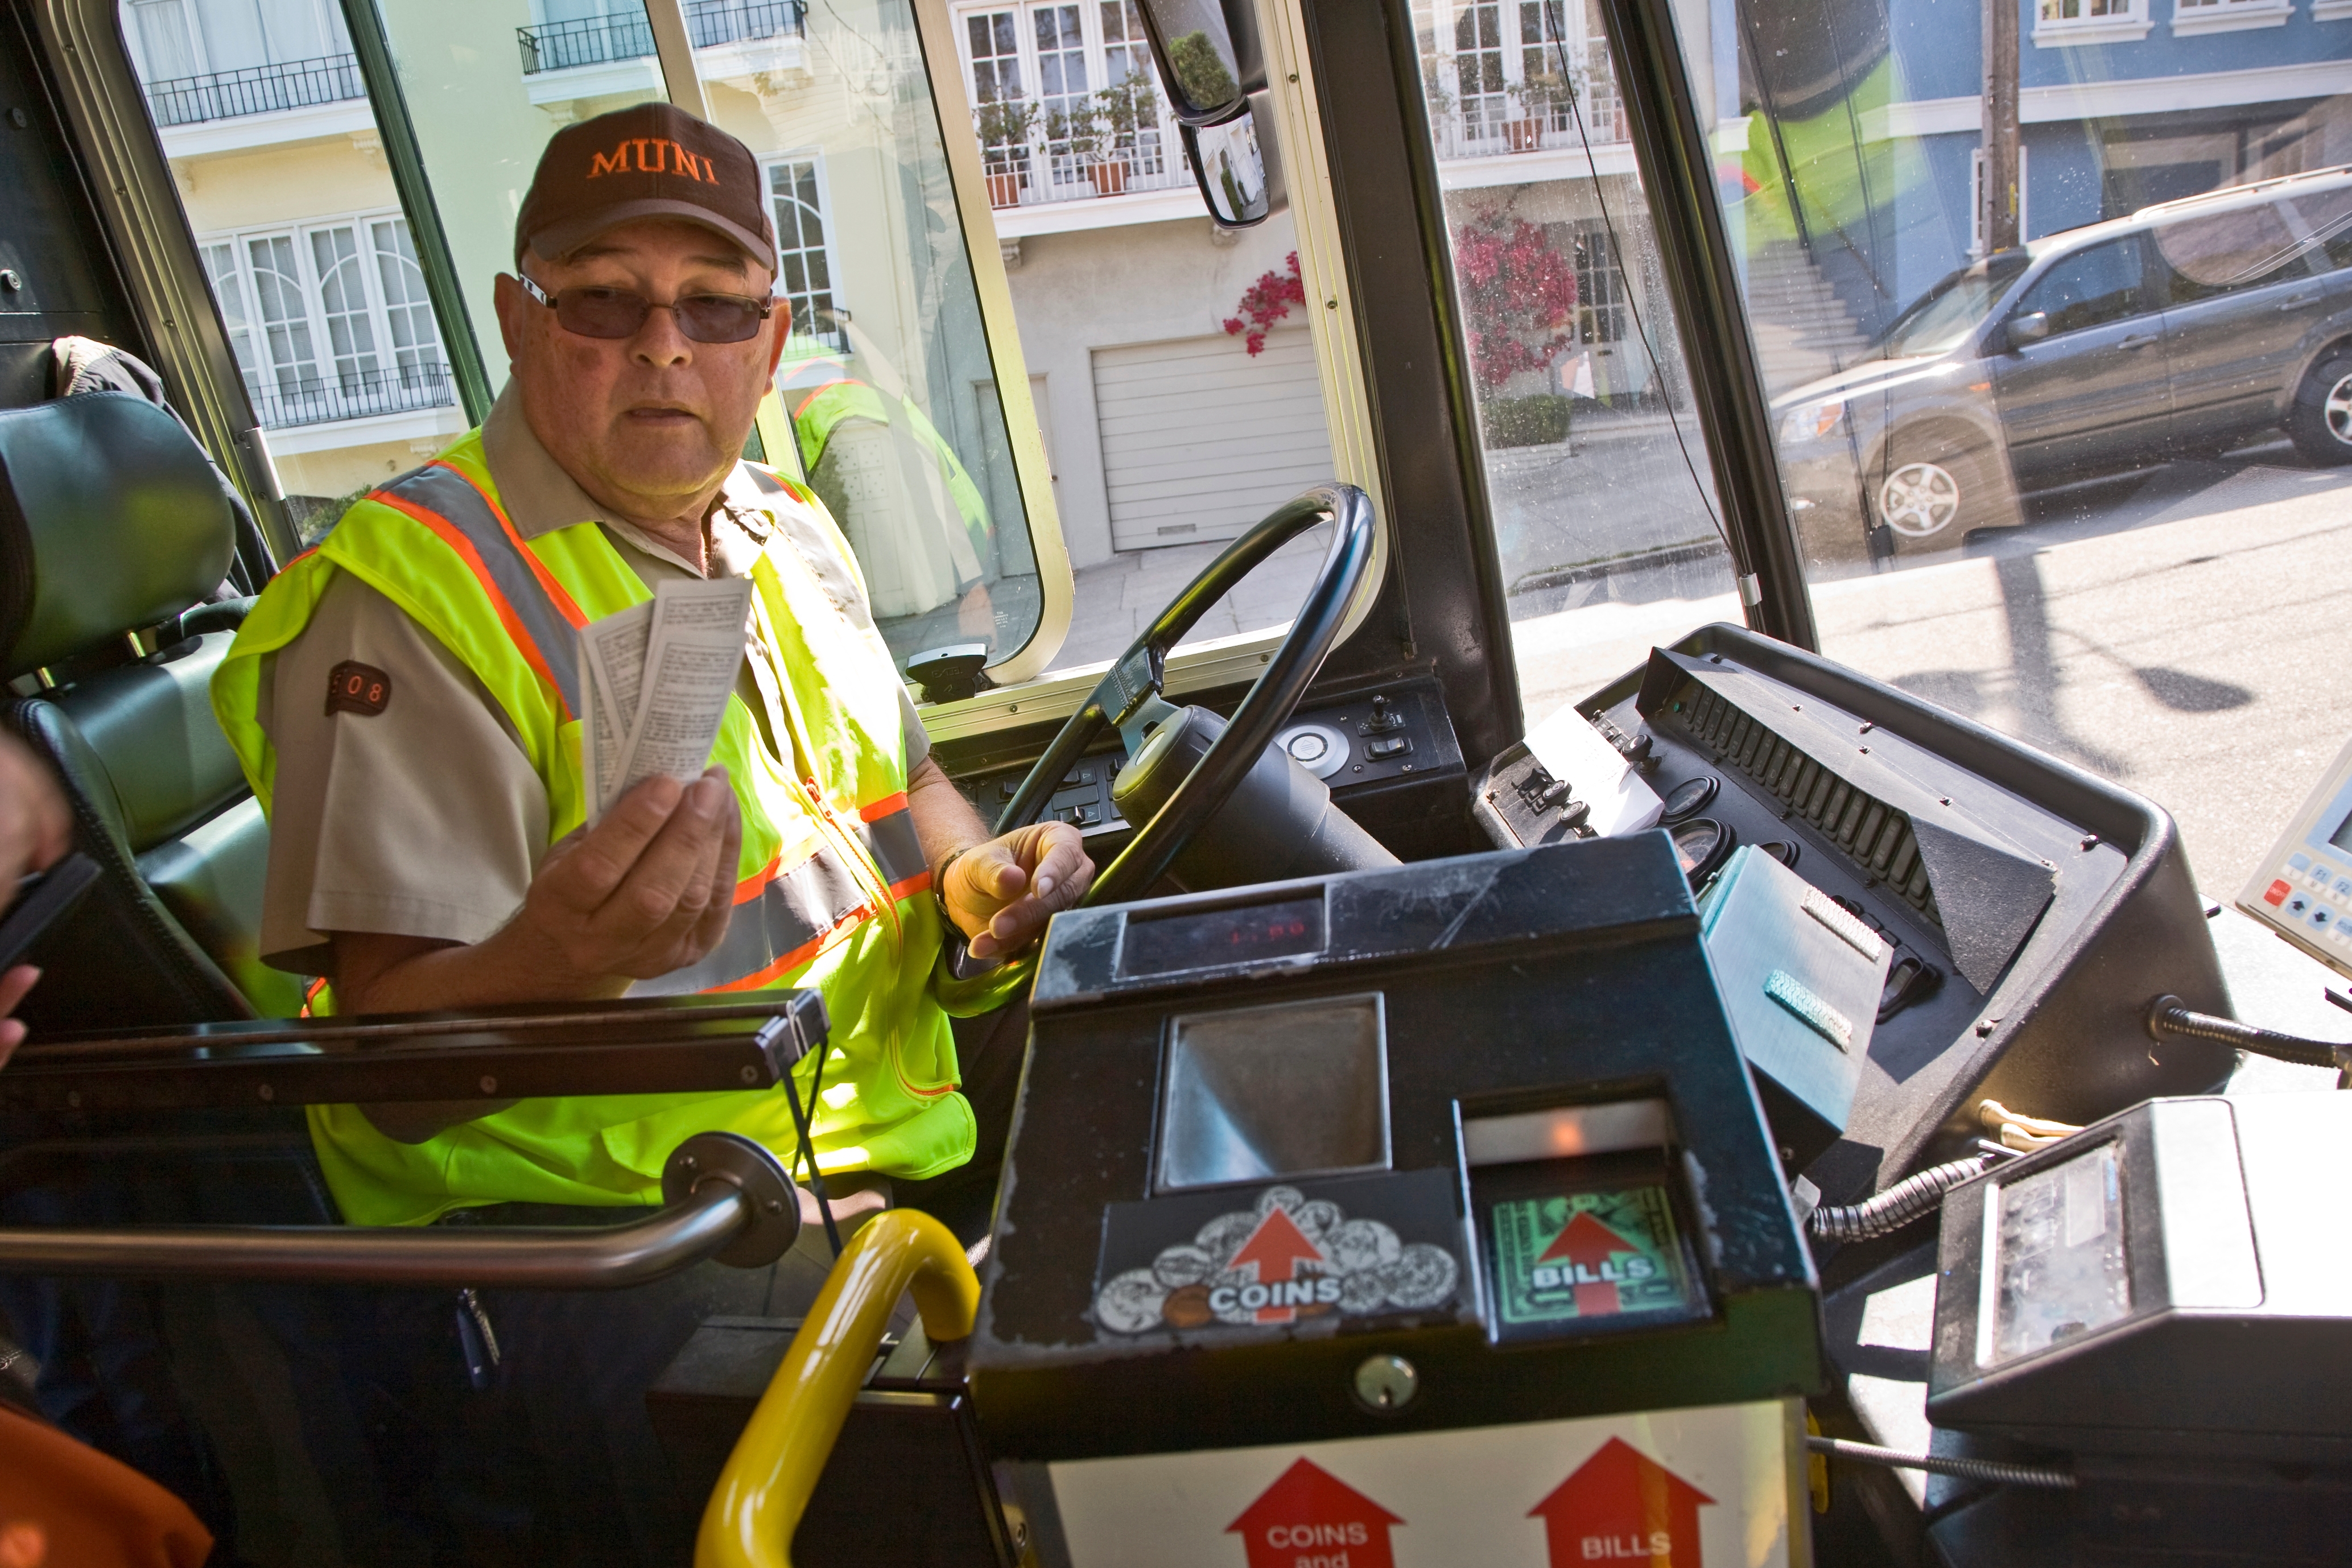 A bus driver | Source: Shutterstock